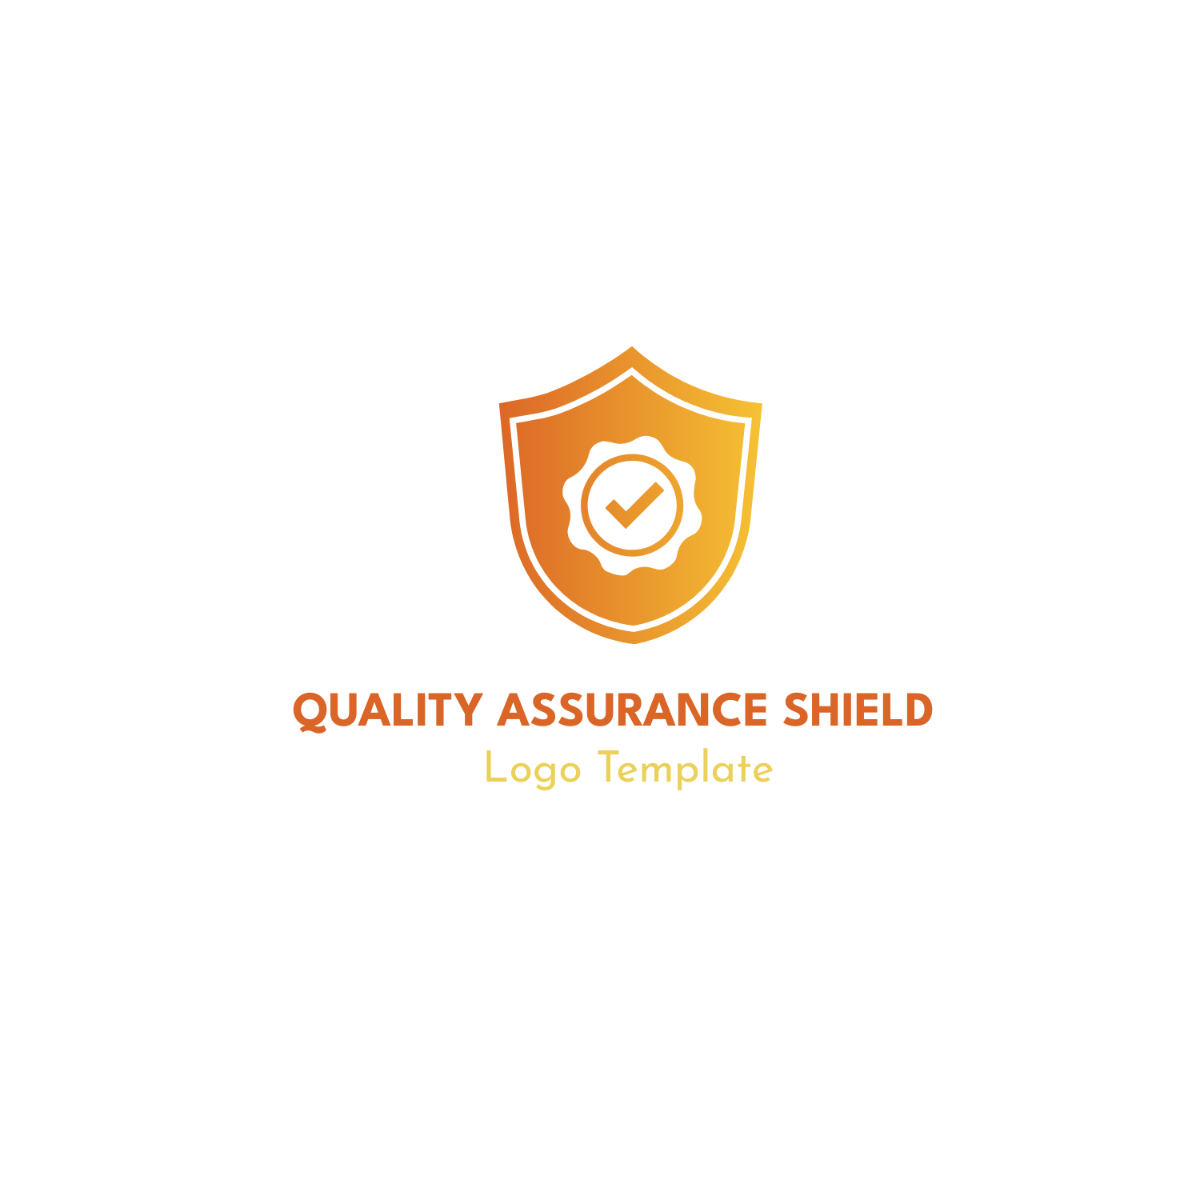 Quality Assurance Shield Logo Template